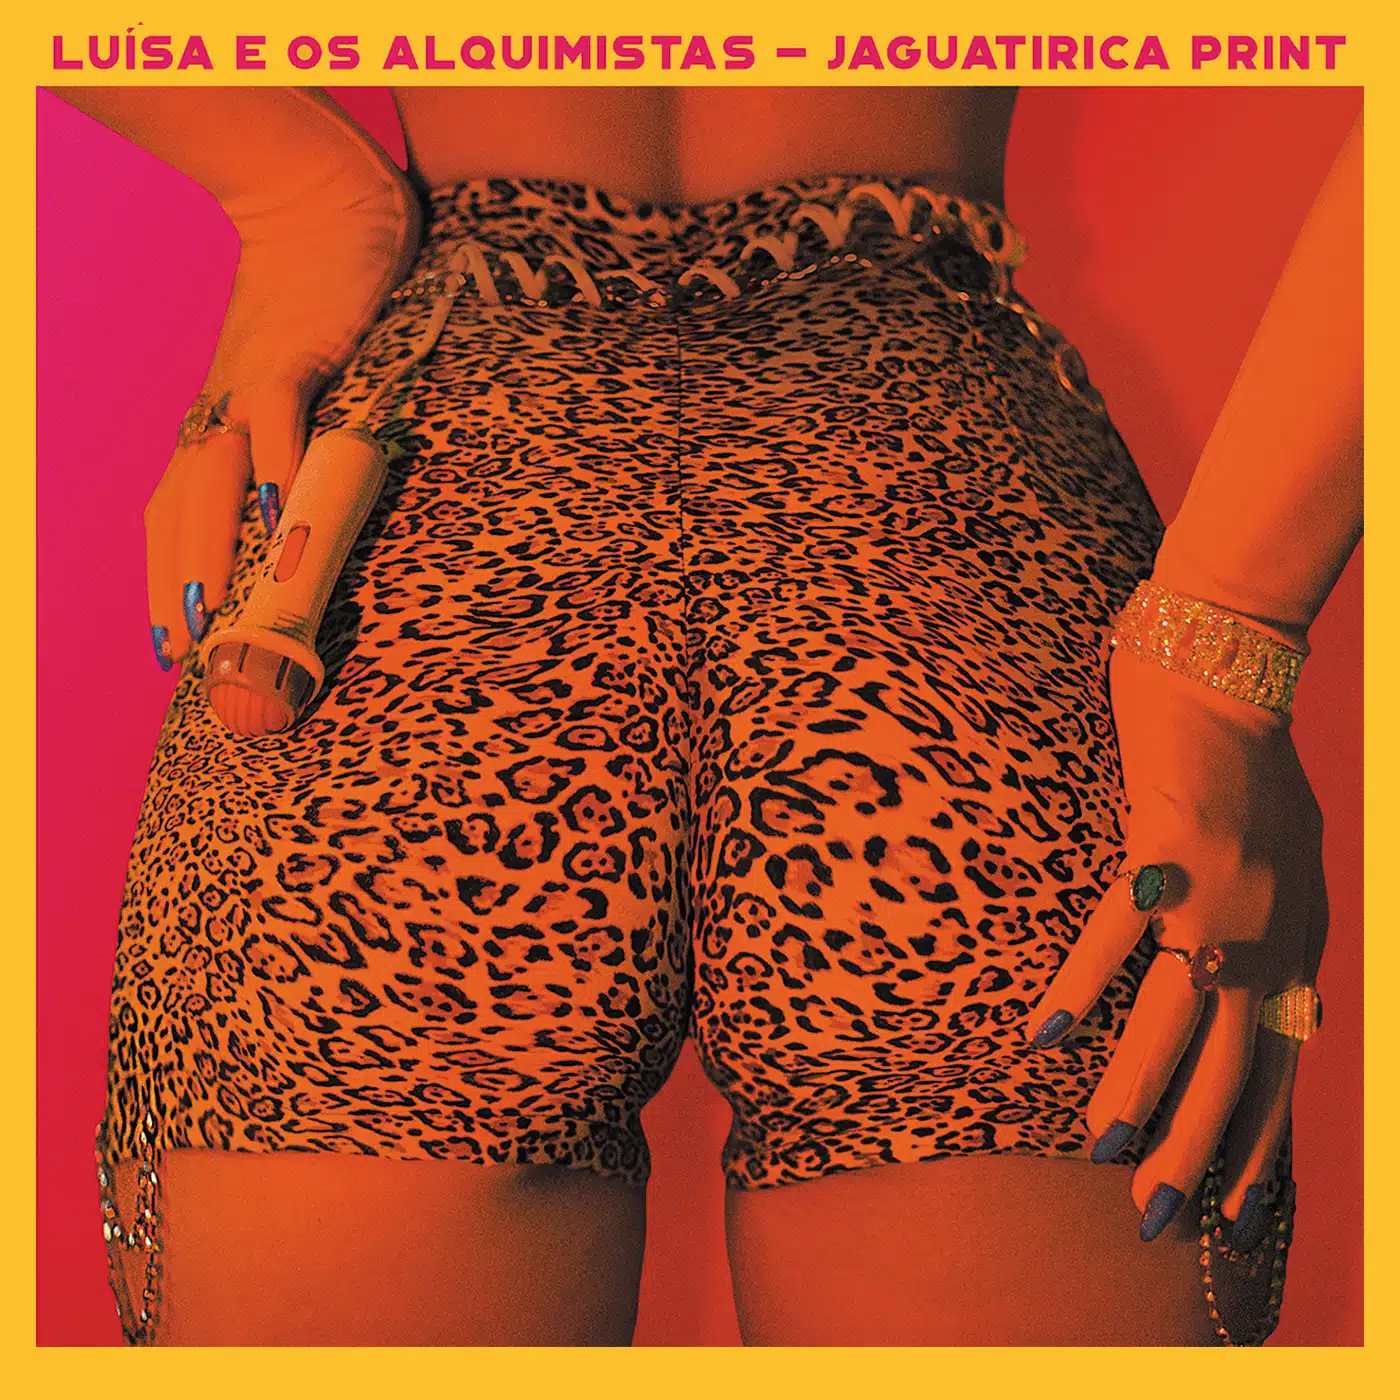 Luísa E Os Alquimistas Lança novo álbum “JAGUATIRICA PRINT”